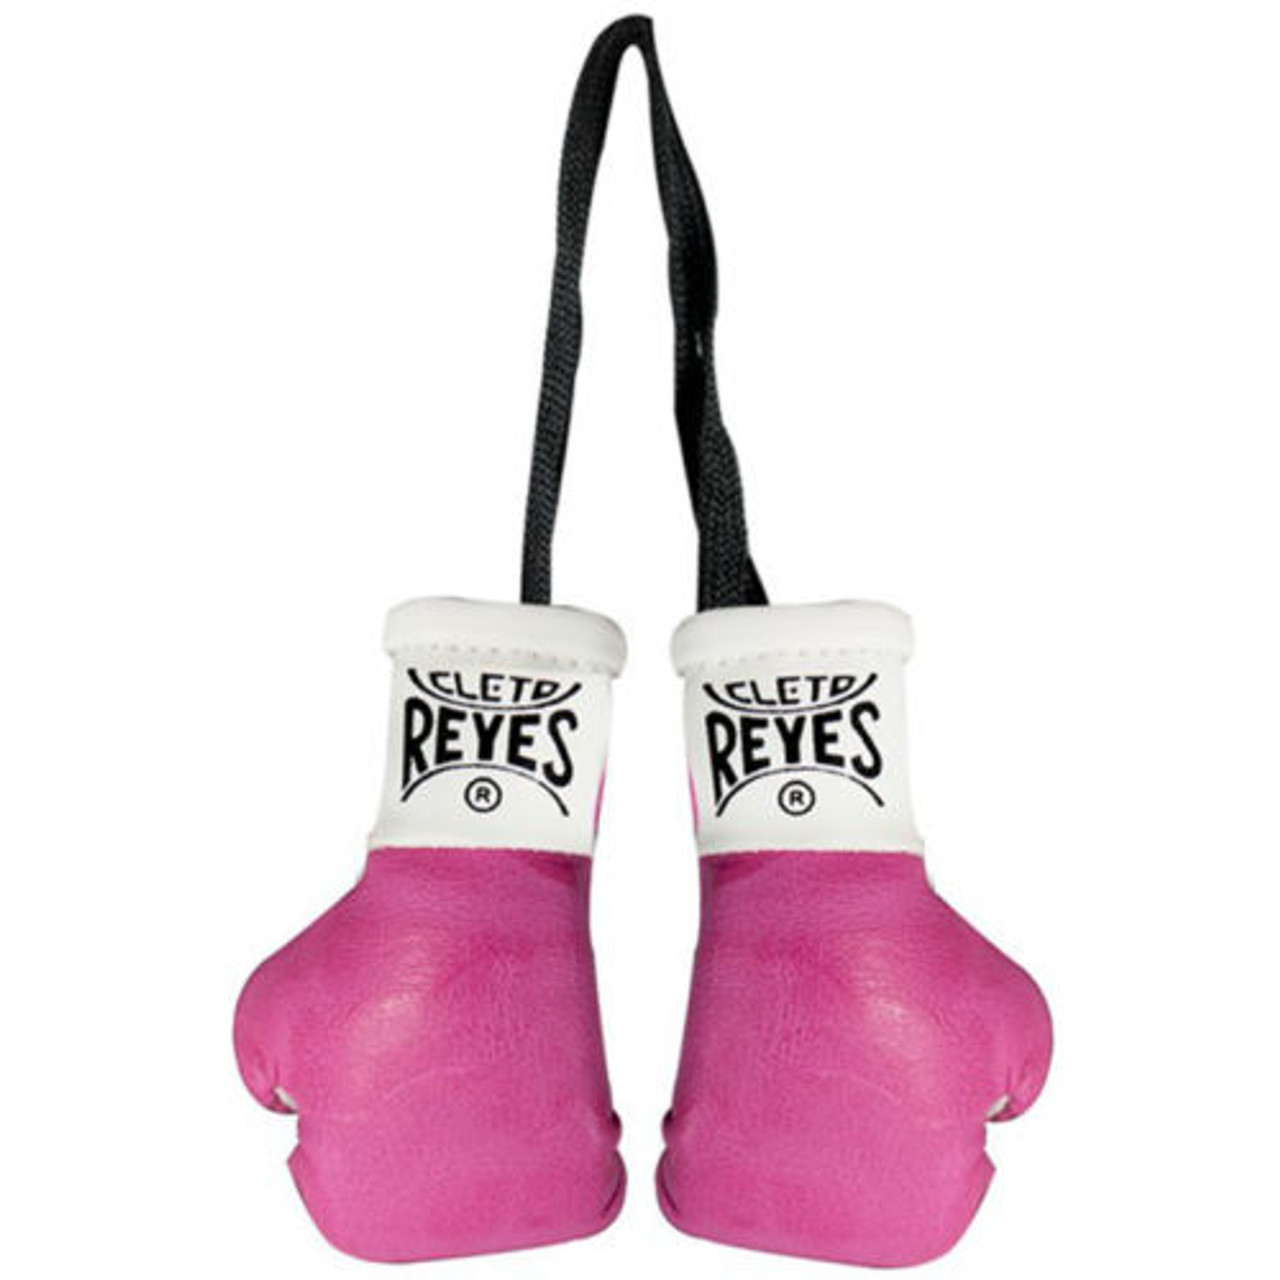 Cleto Reyes Miniature Pair of Boxing Gloves - Pink